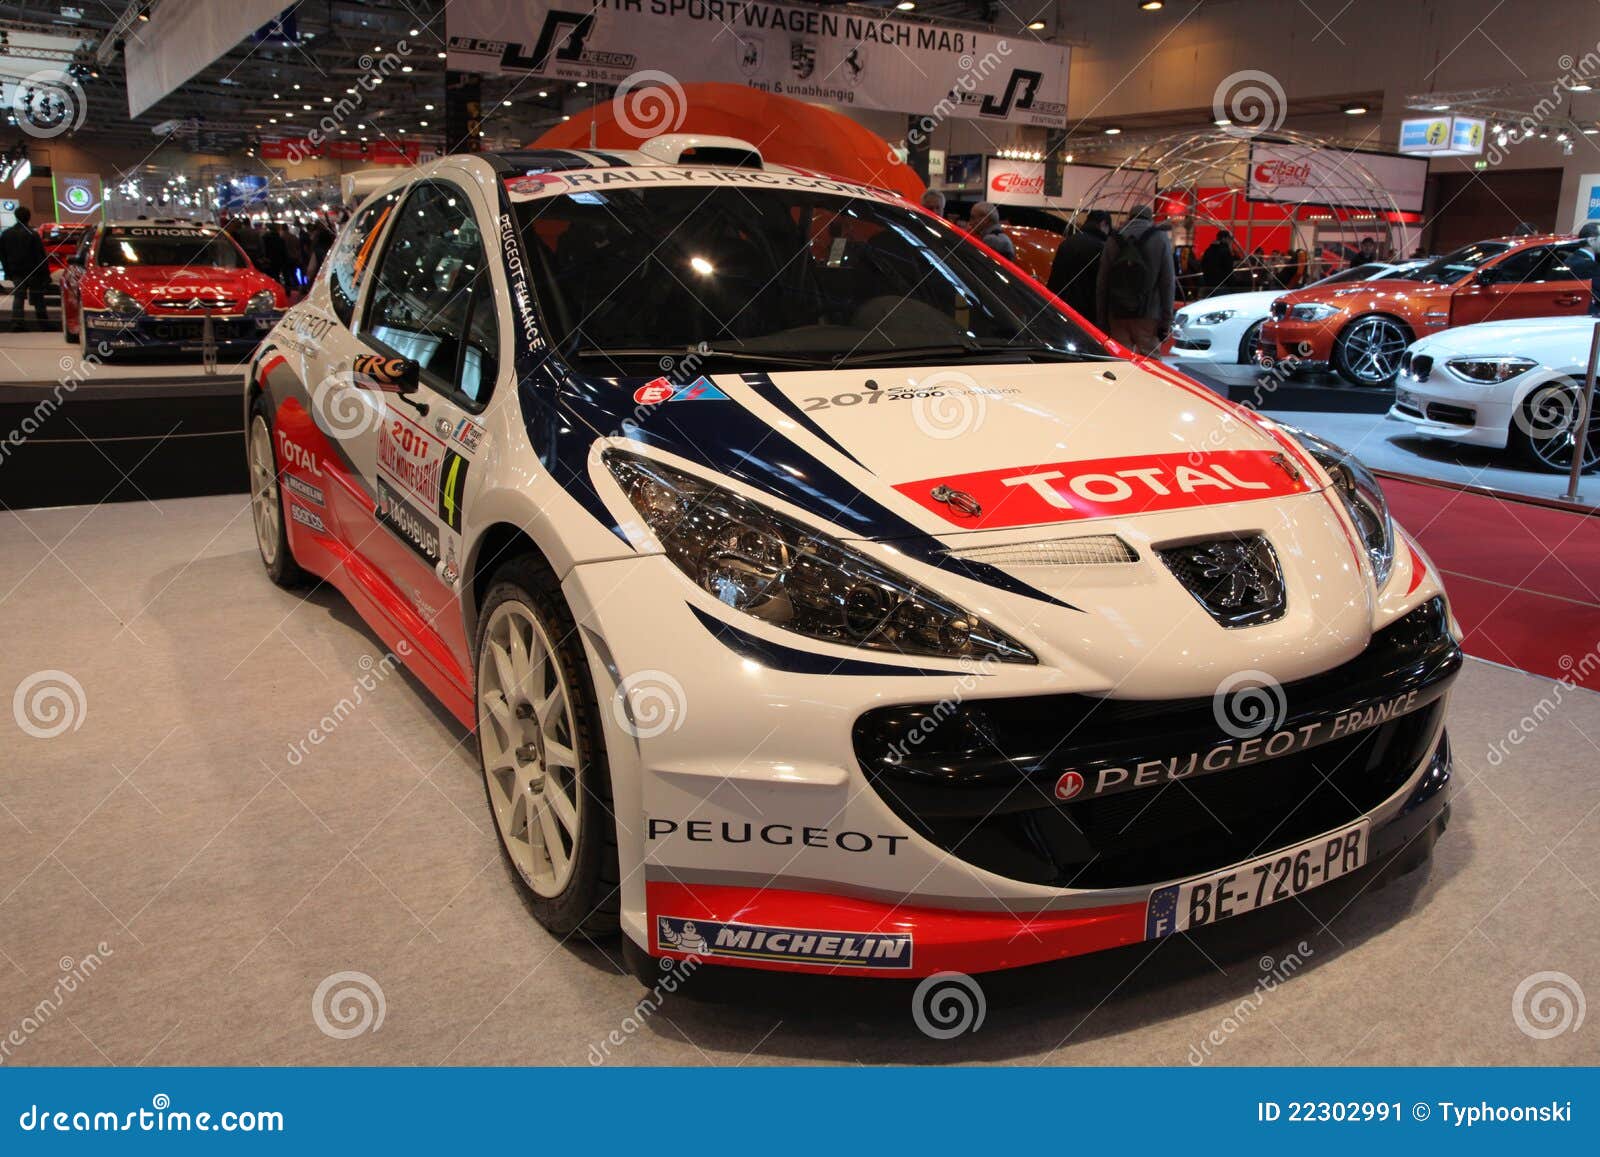 Peugeot 207 Super 2000 editorial photo. Image of concept - 22302991